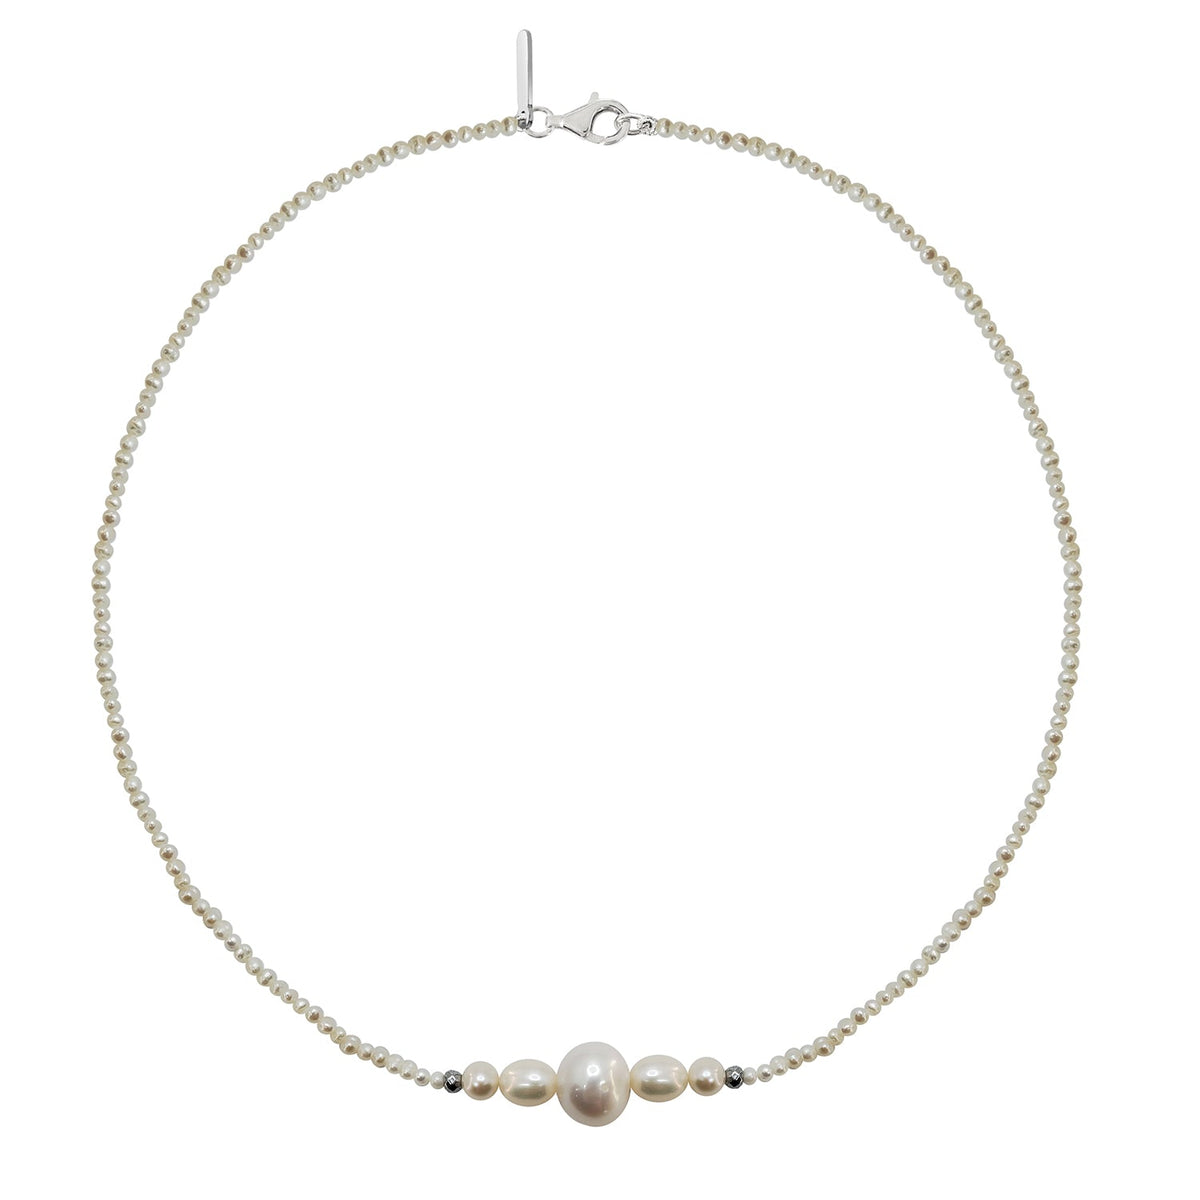 Necklace 925 Silver Women Marina Small Pearls 5 Modulos Anamora by Tanya Moss